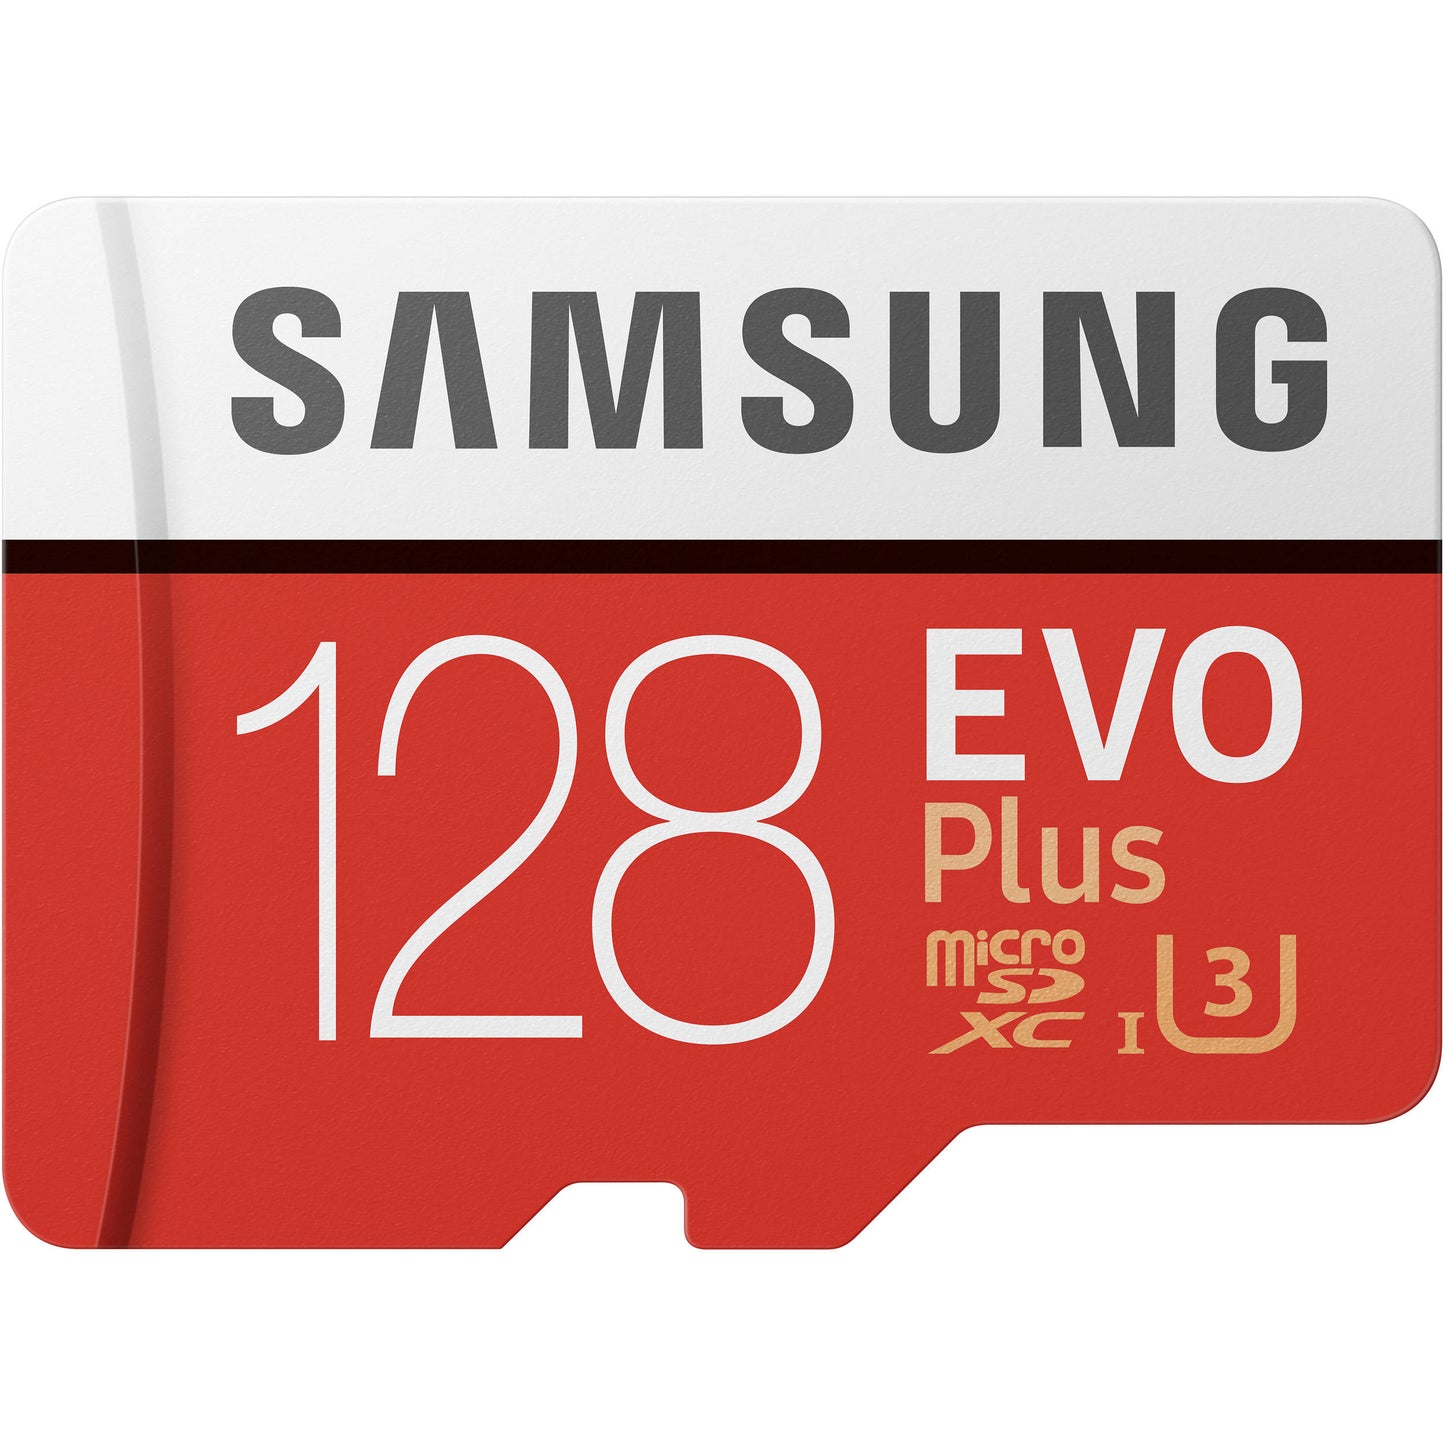 Samsung SD card